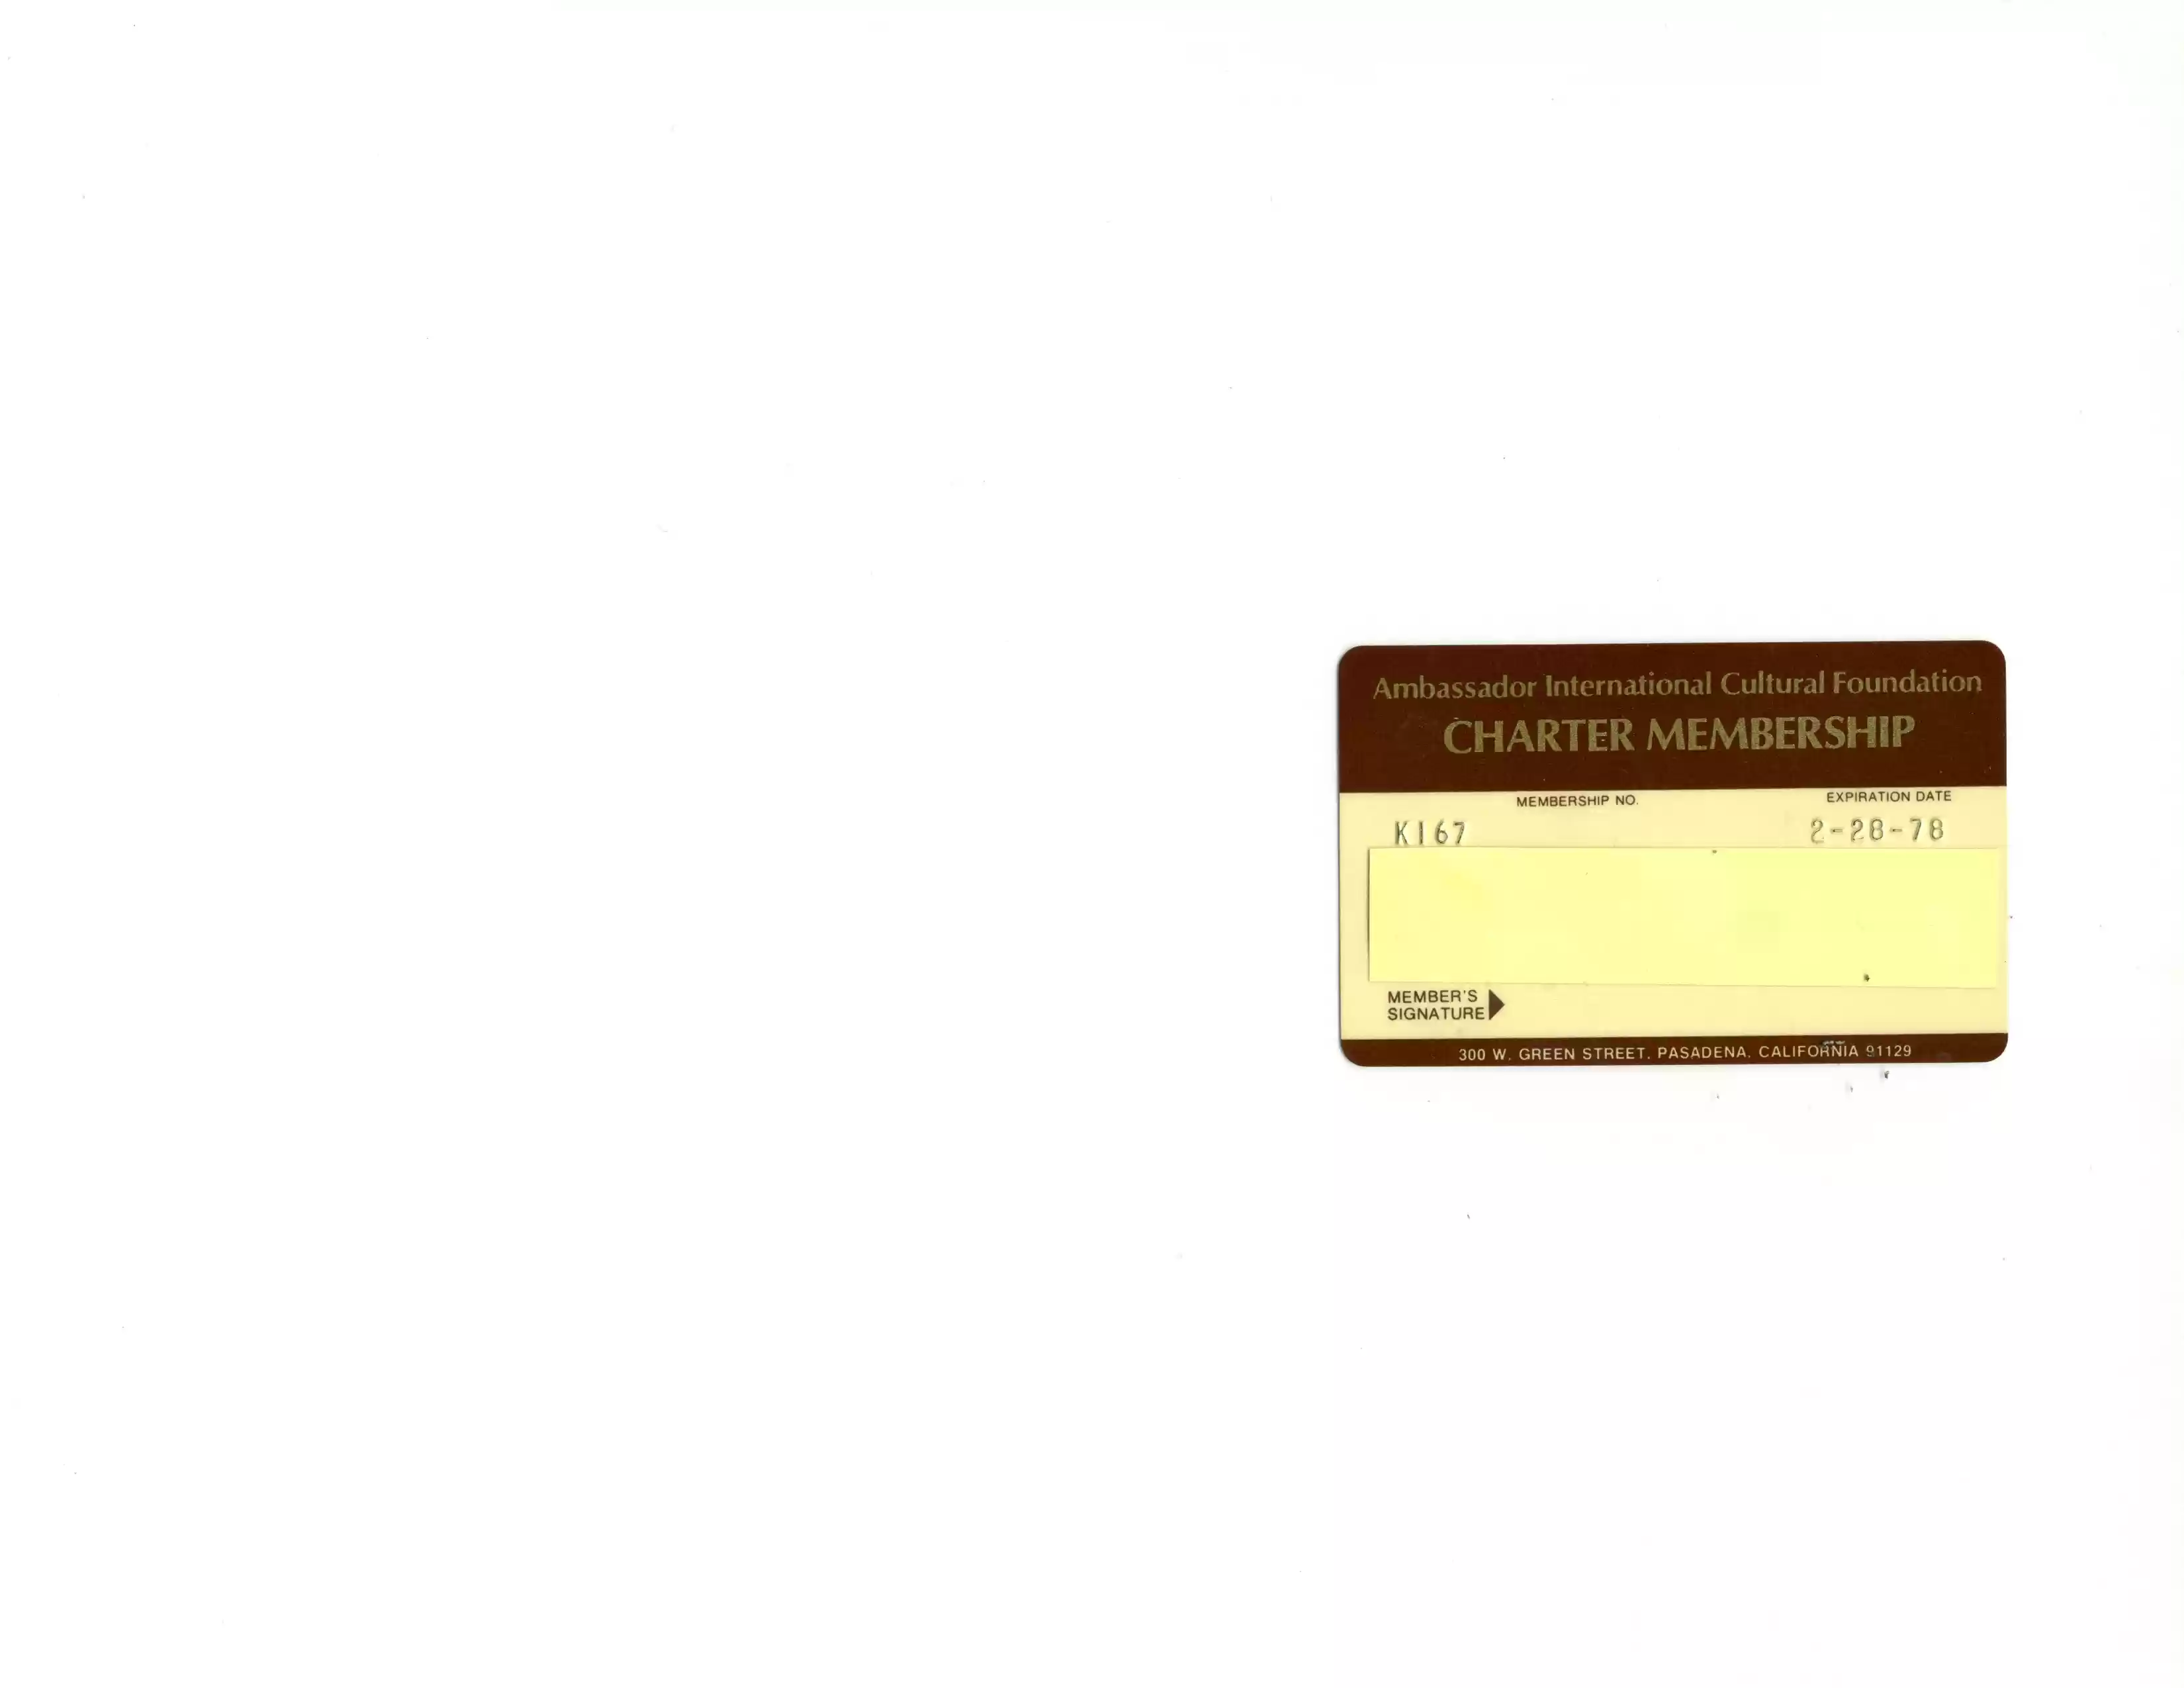 AICF charter membership card 1978